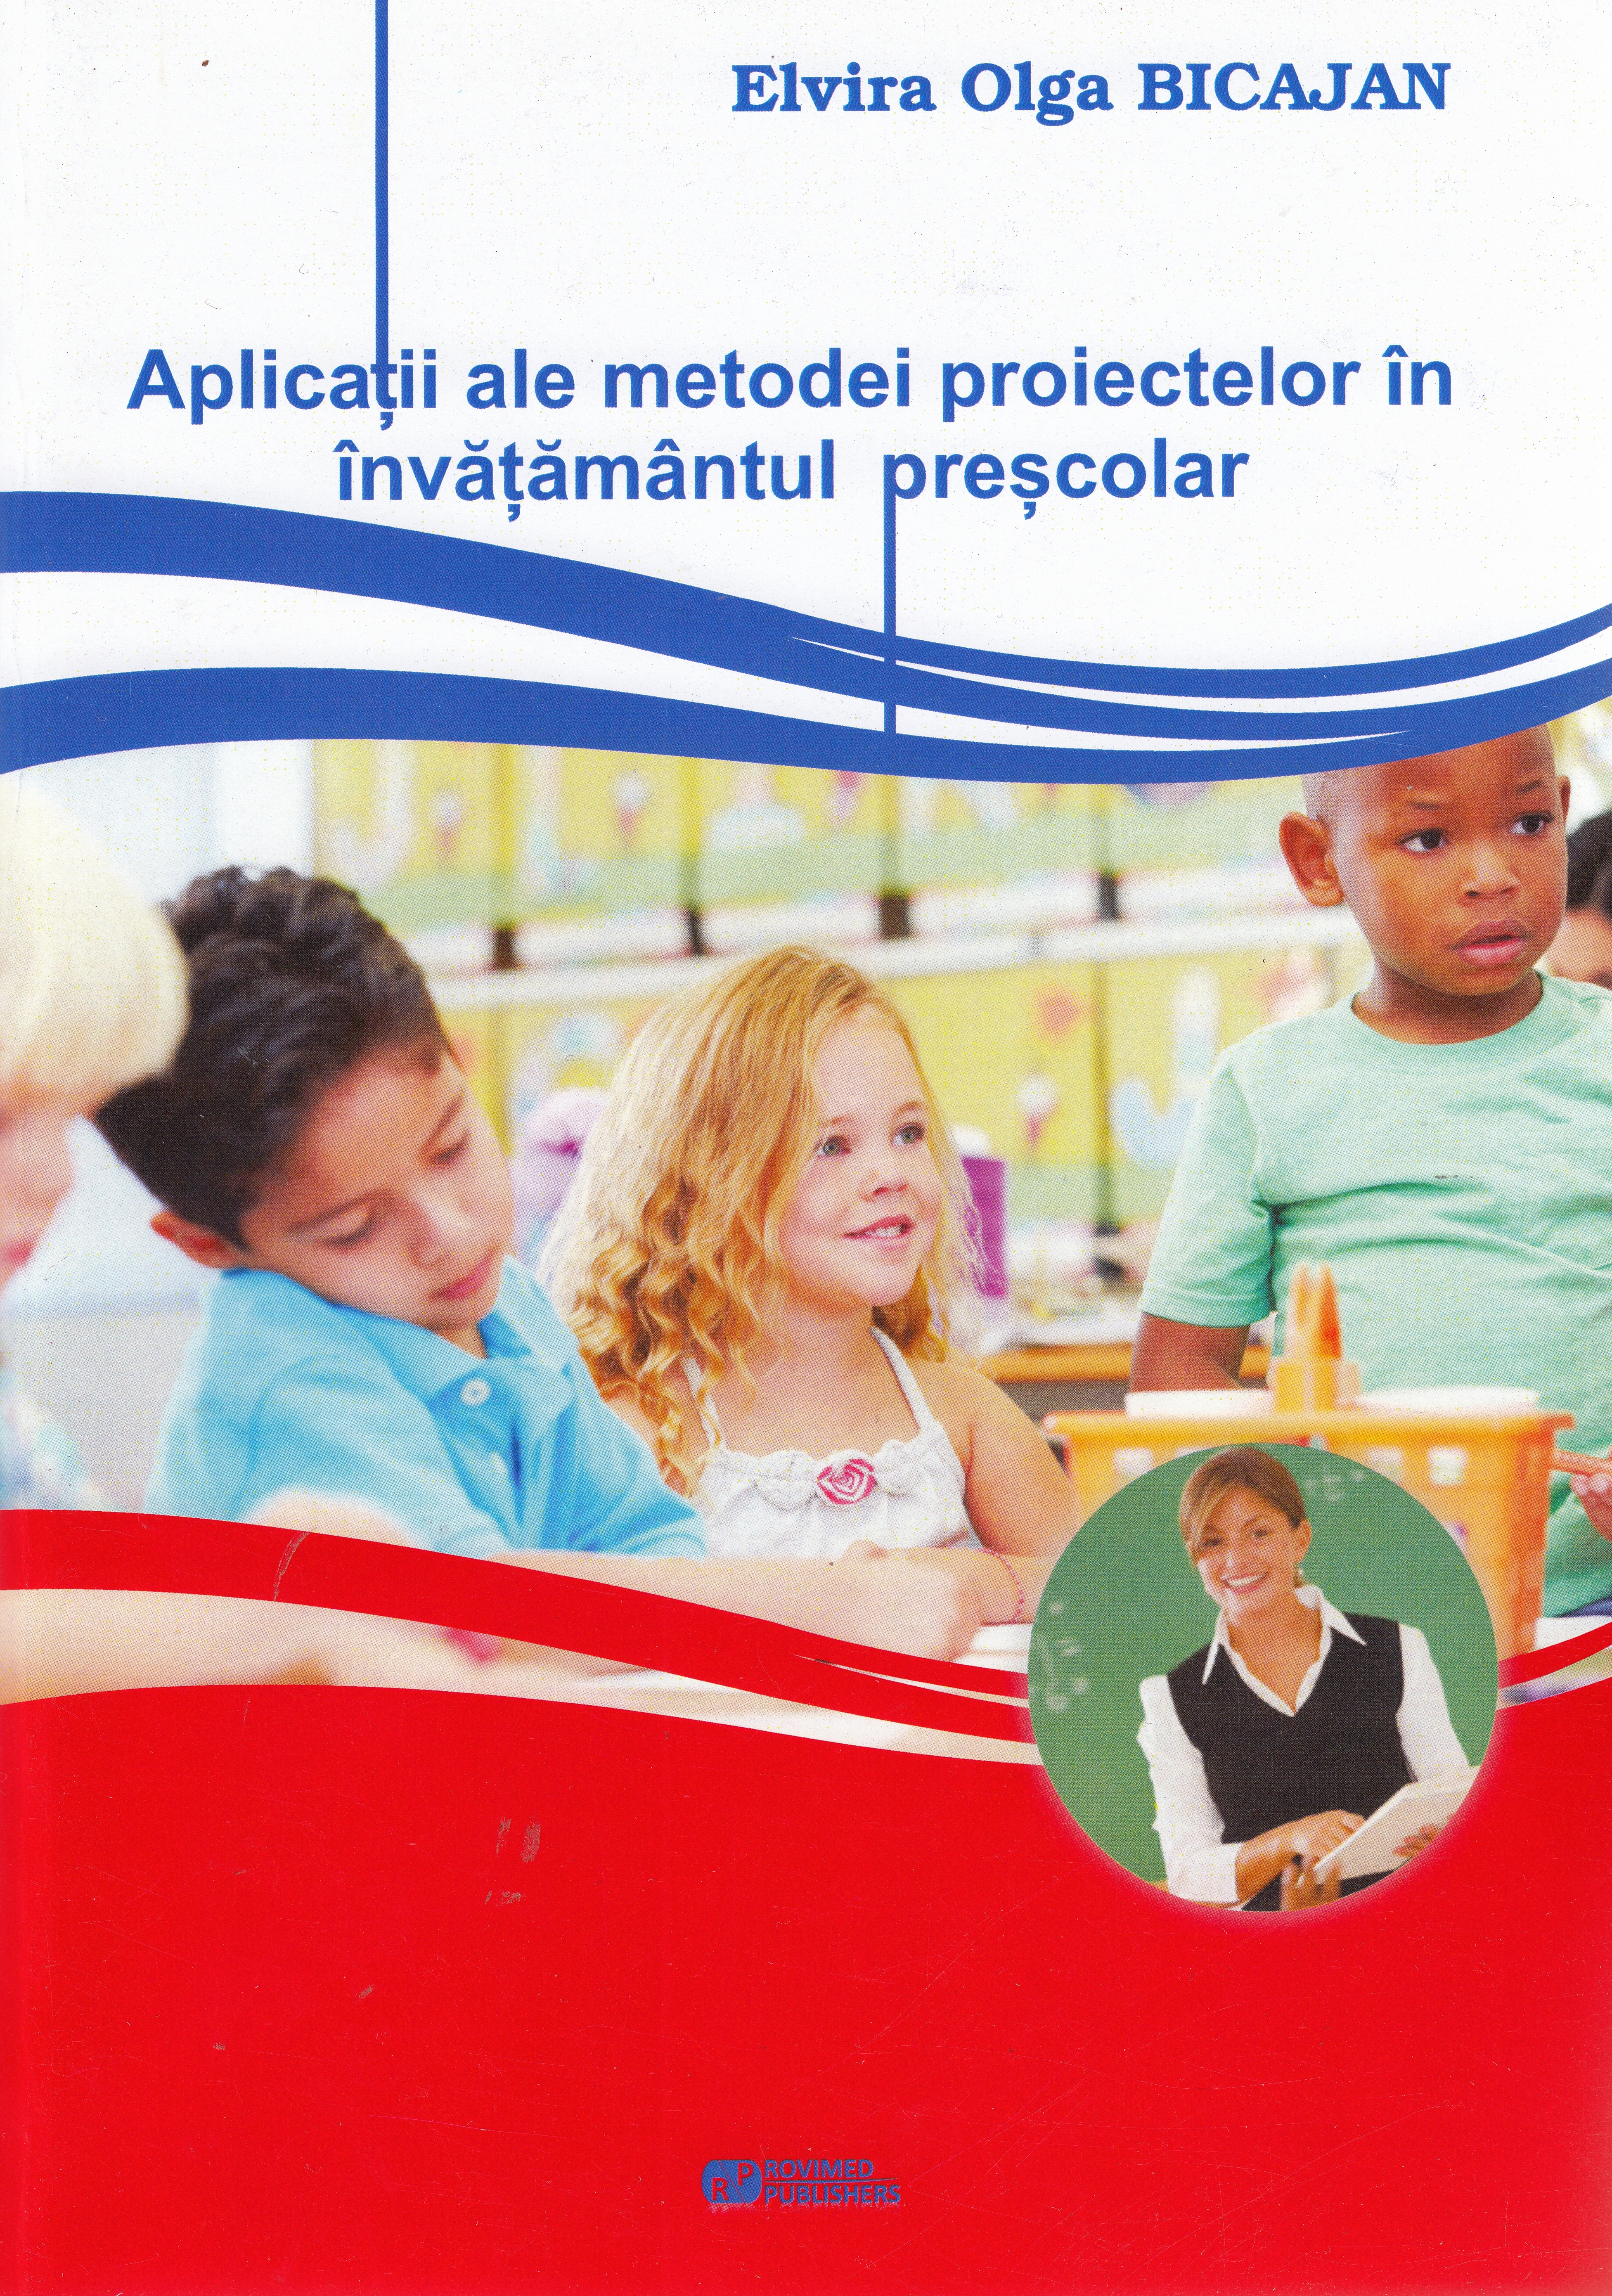 Aplicatii ale metodei proiectelor in invatamantul prescolar - Elvira Olga Bicajan